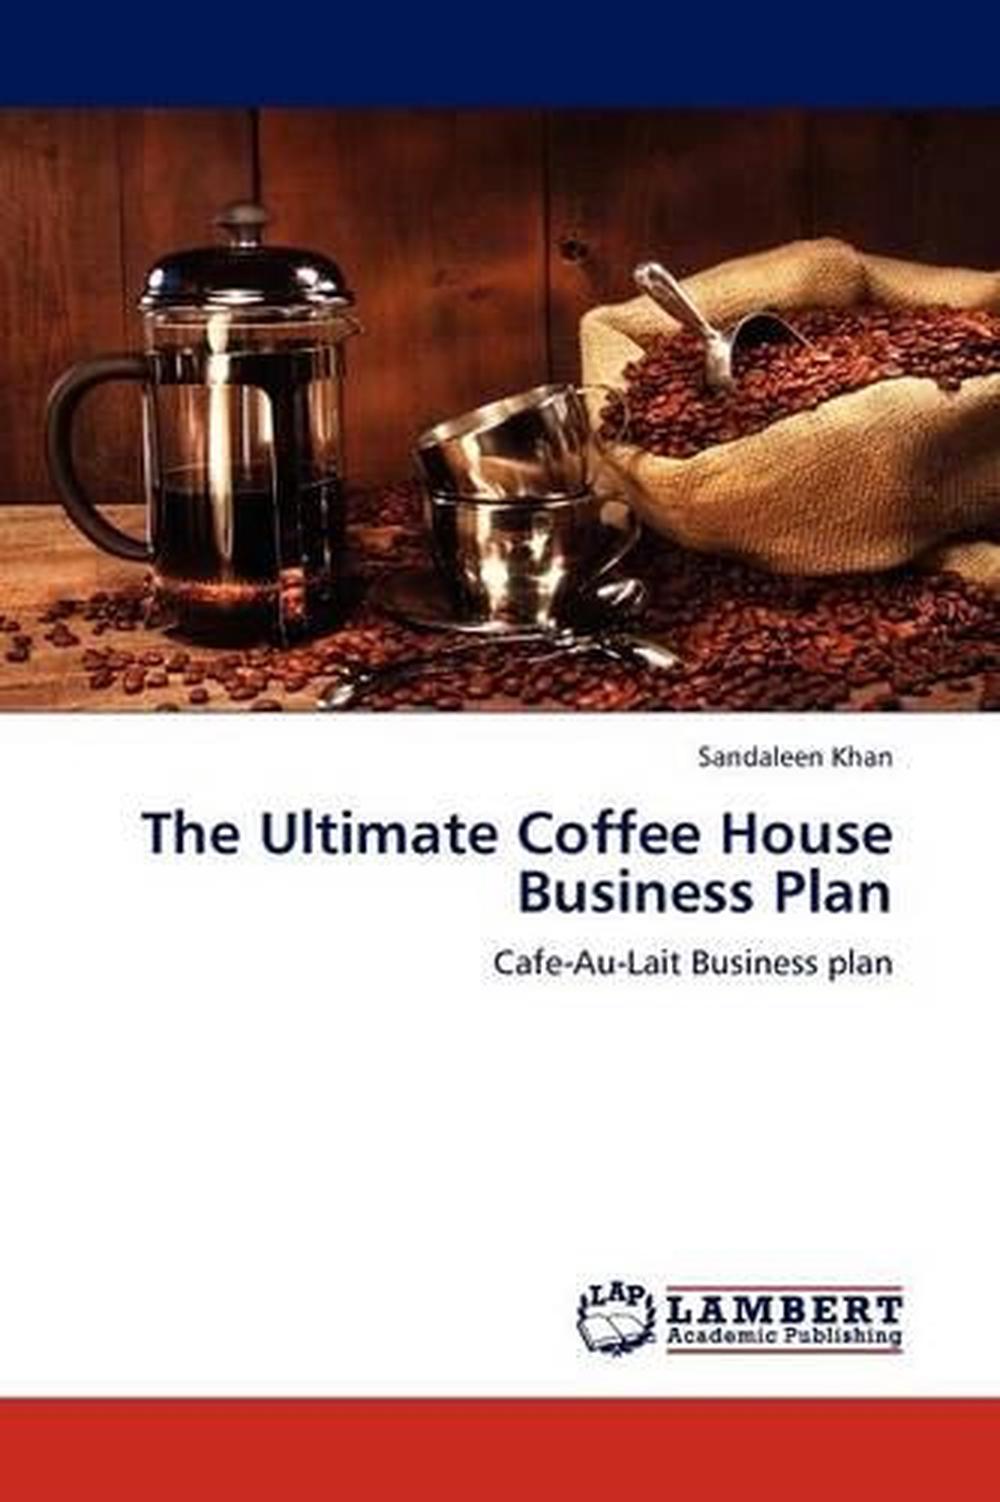 tea house business plan pdf